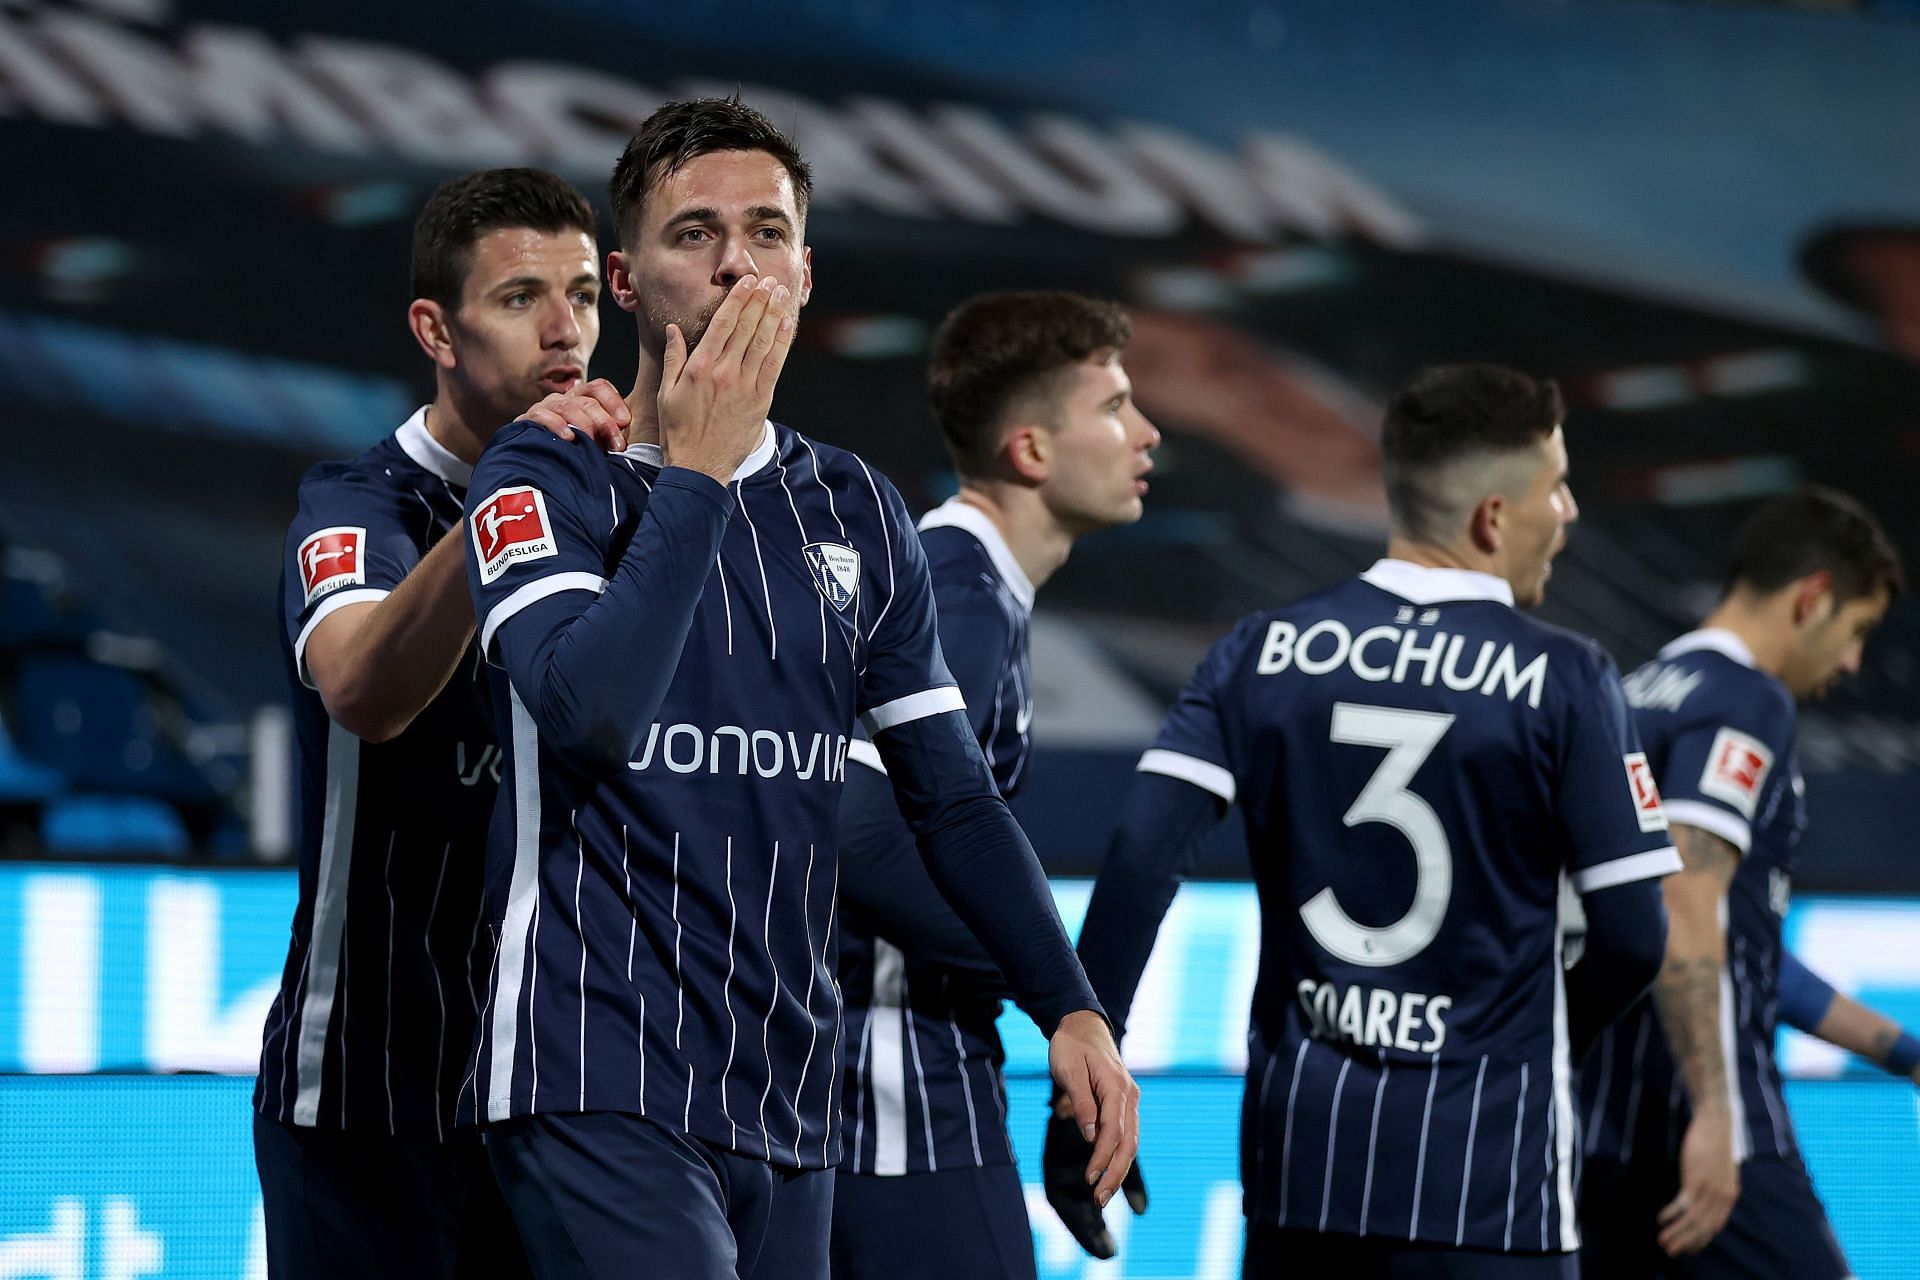 VfL Bochum will face FSV Mainz 05 on Saturday